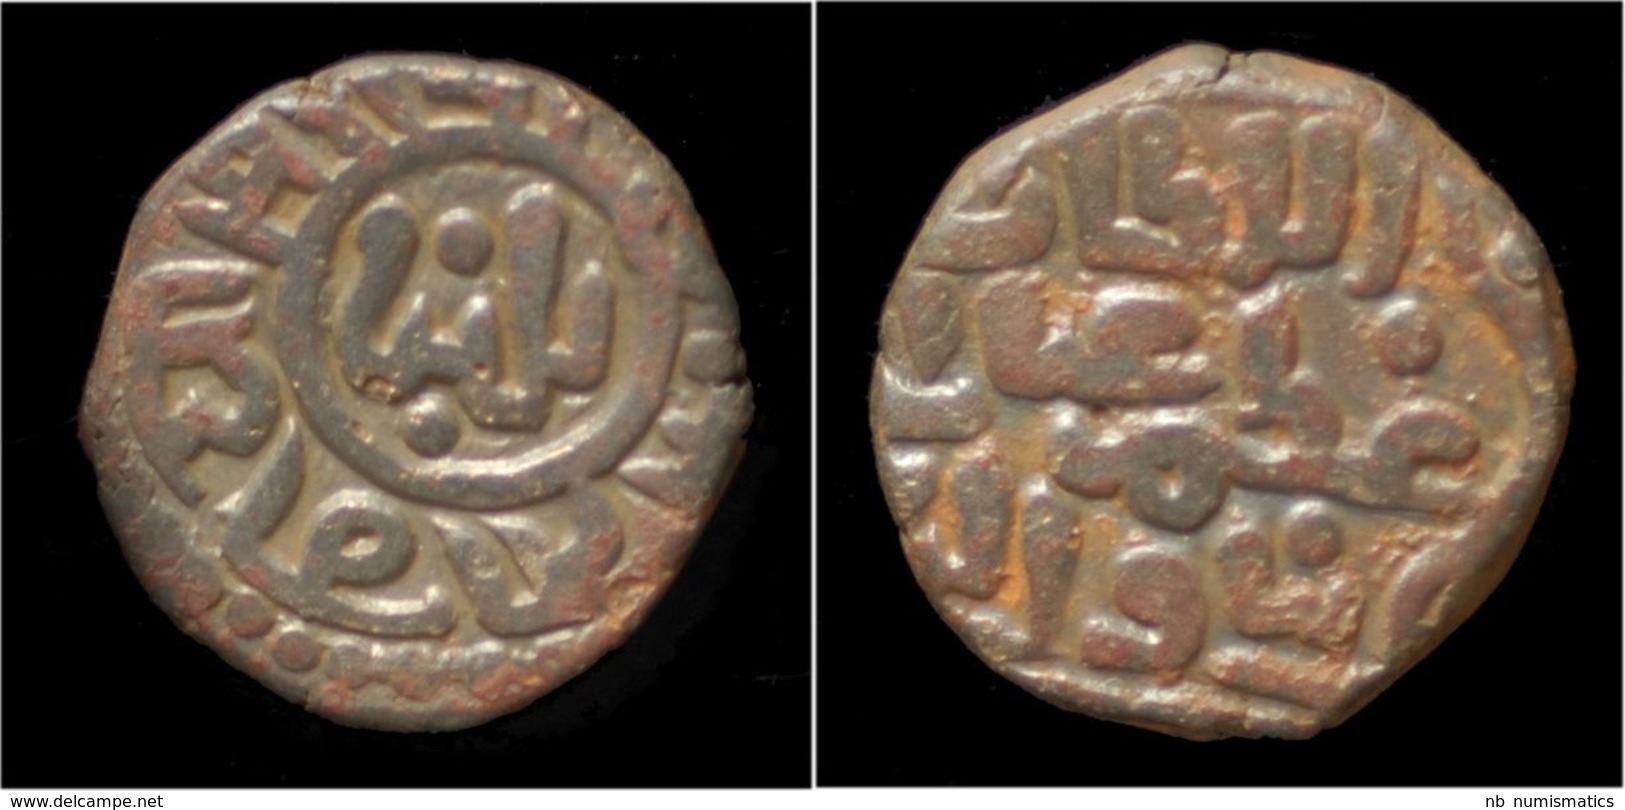 India Sultanate Of Delhi Ghiyath Al-Din Balban Billon 2 Ghani - Indian